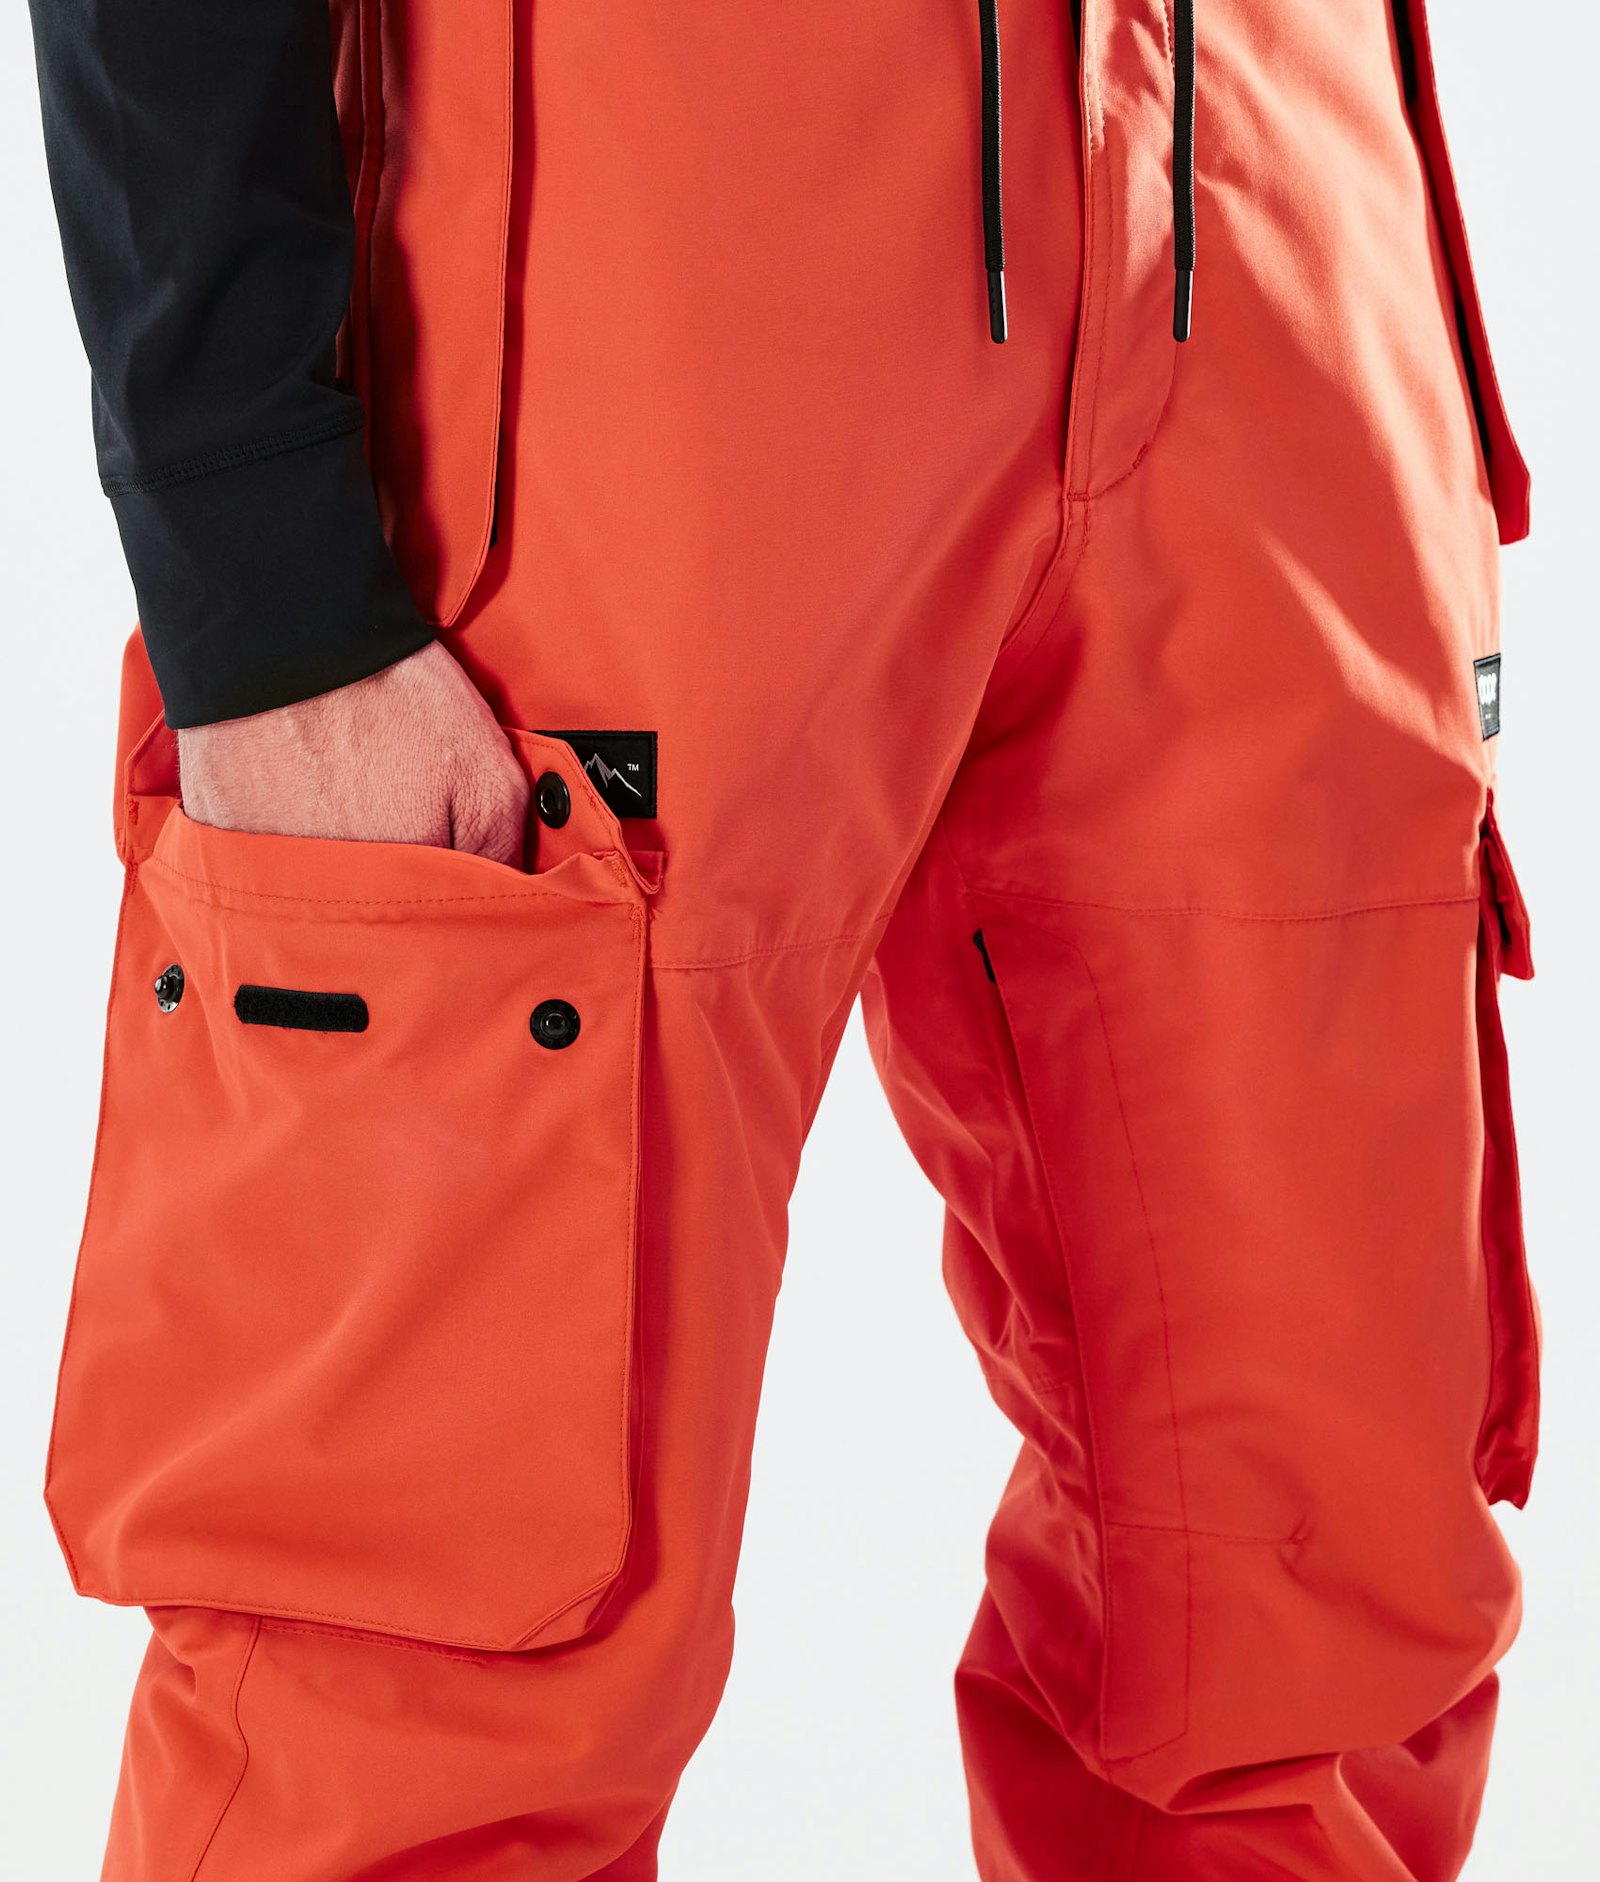 Iconic 2021 Pantalon de Snowboard Homme Orange Renewed, Image 5 sur 6